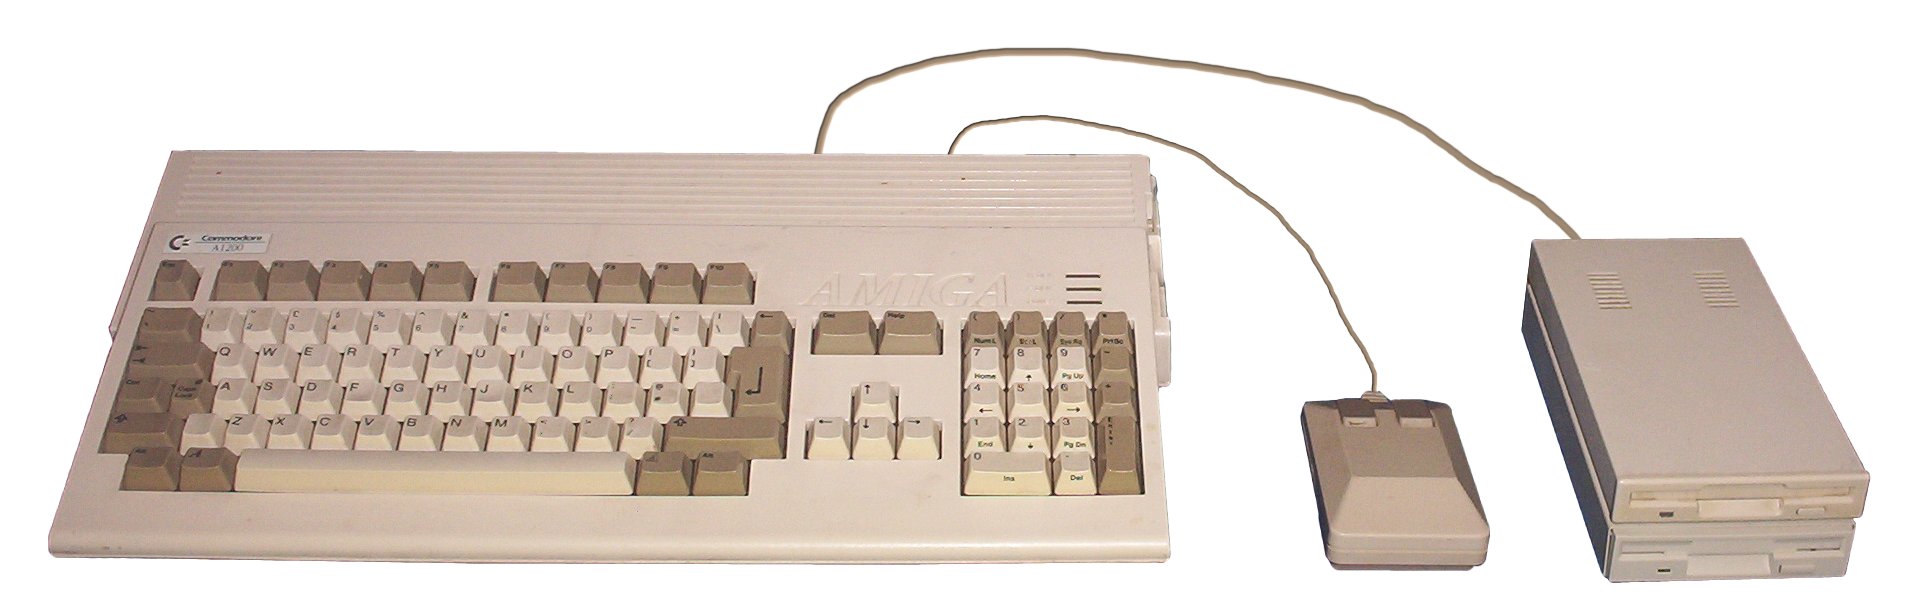 Amiga-1200